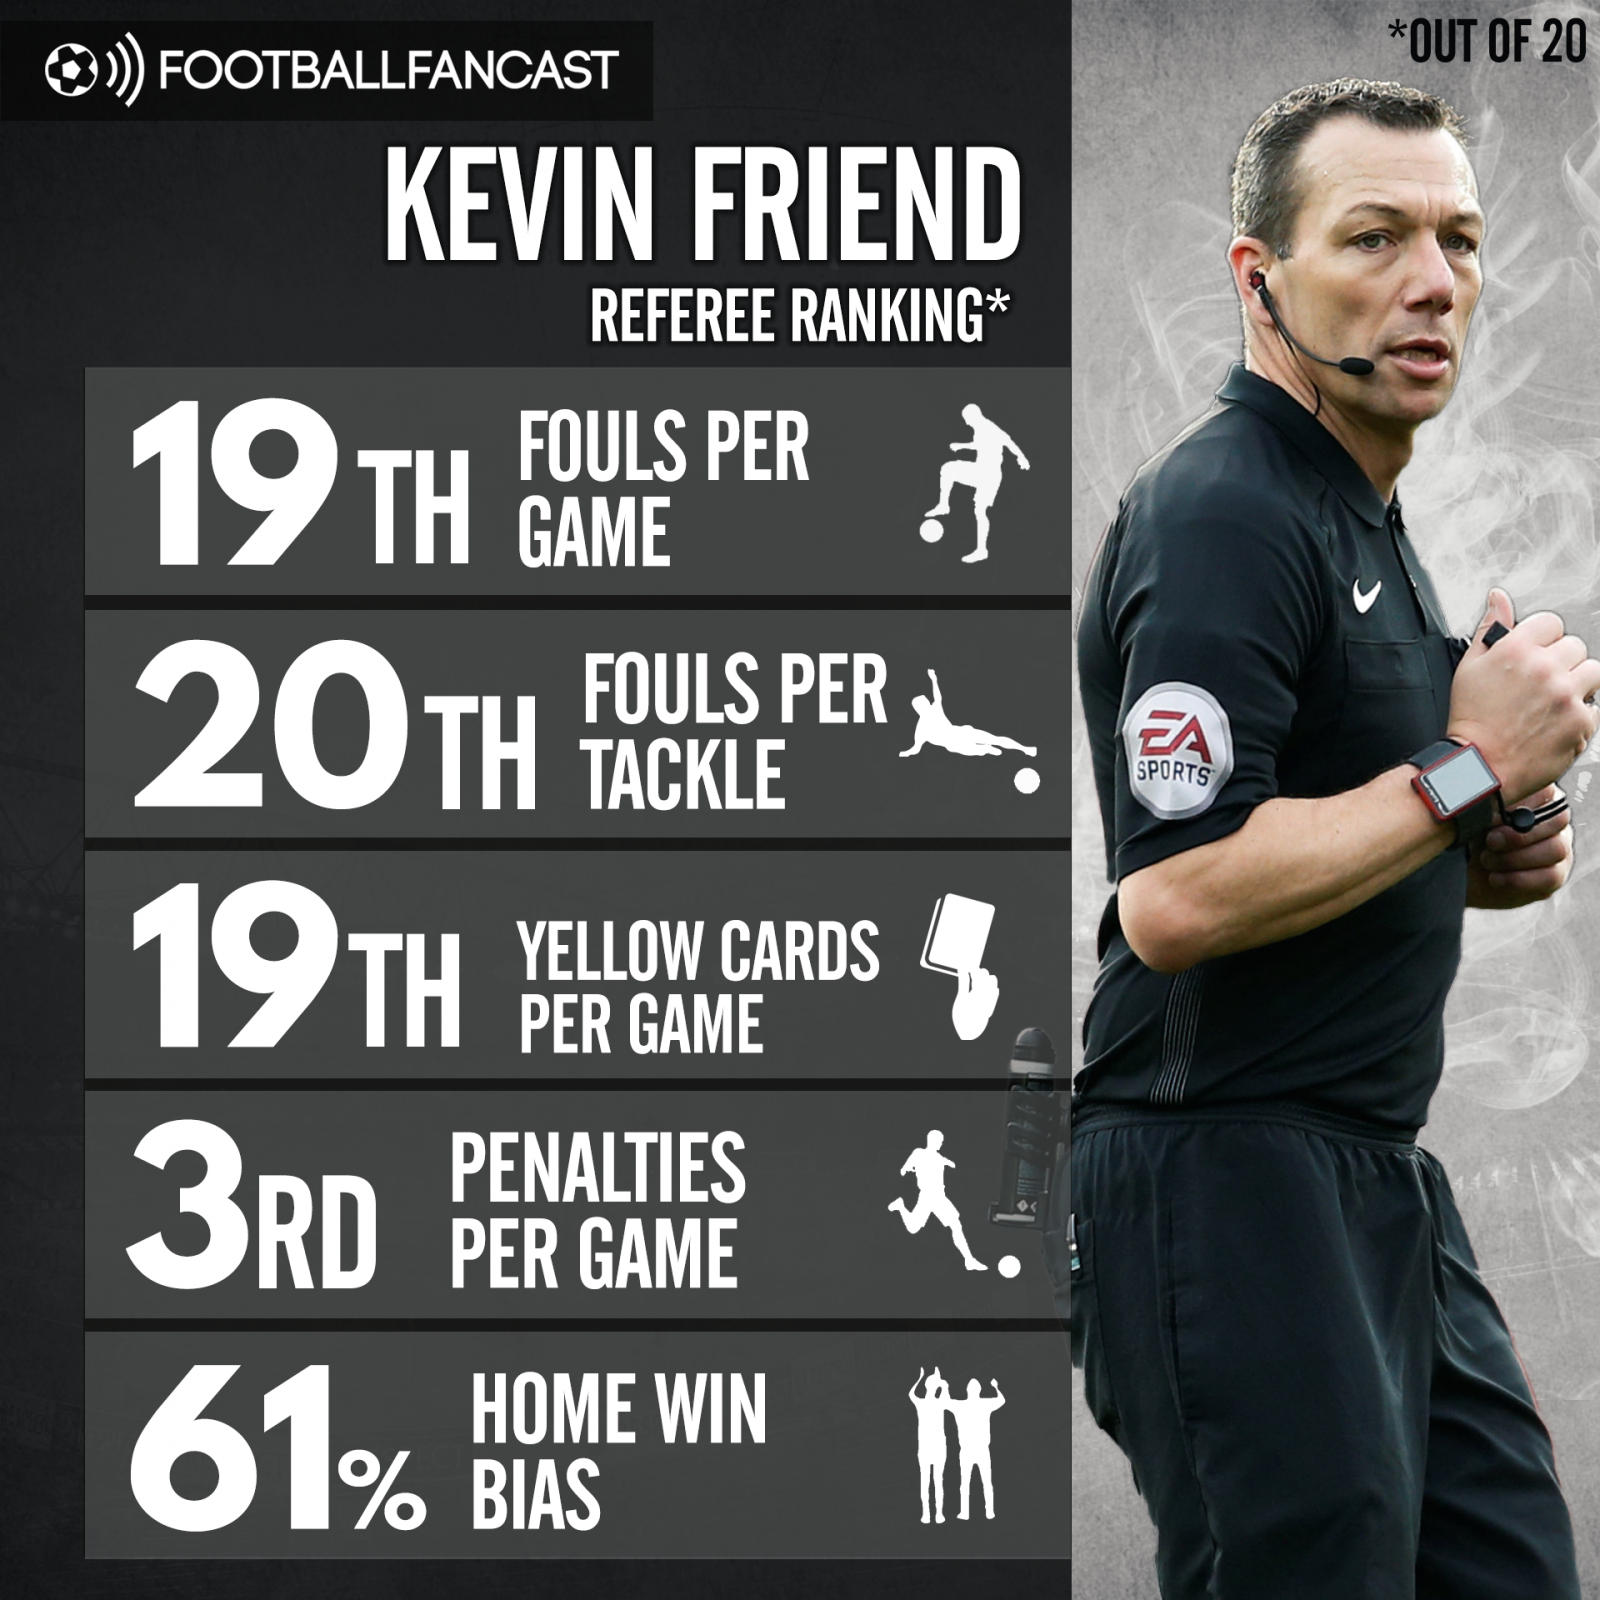 Kevin Friend's statistics in the Premier League this season